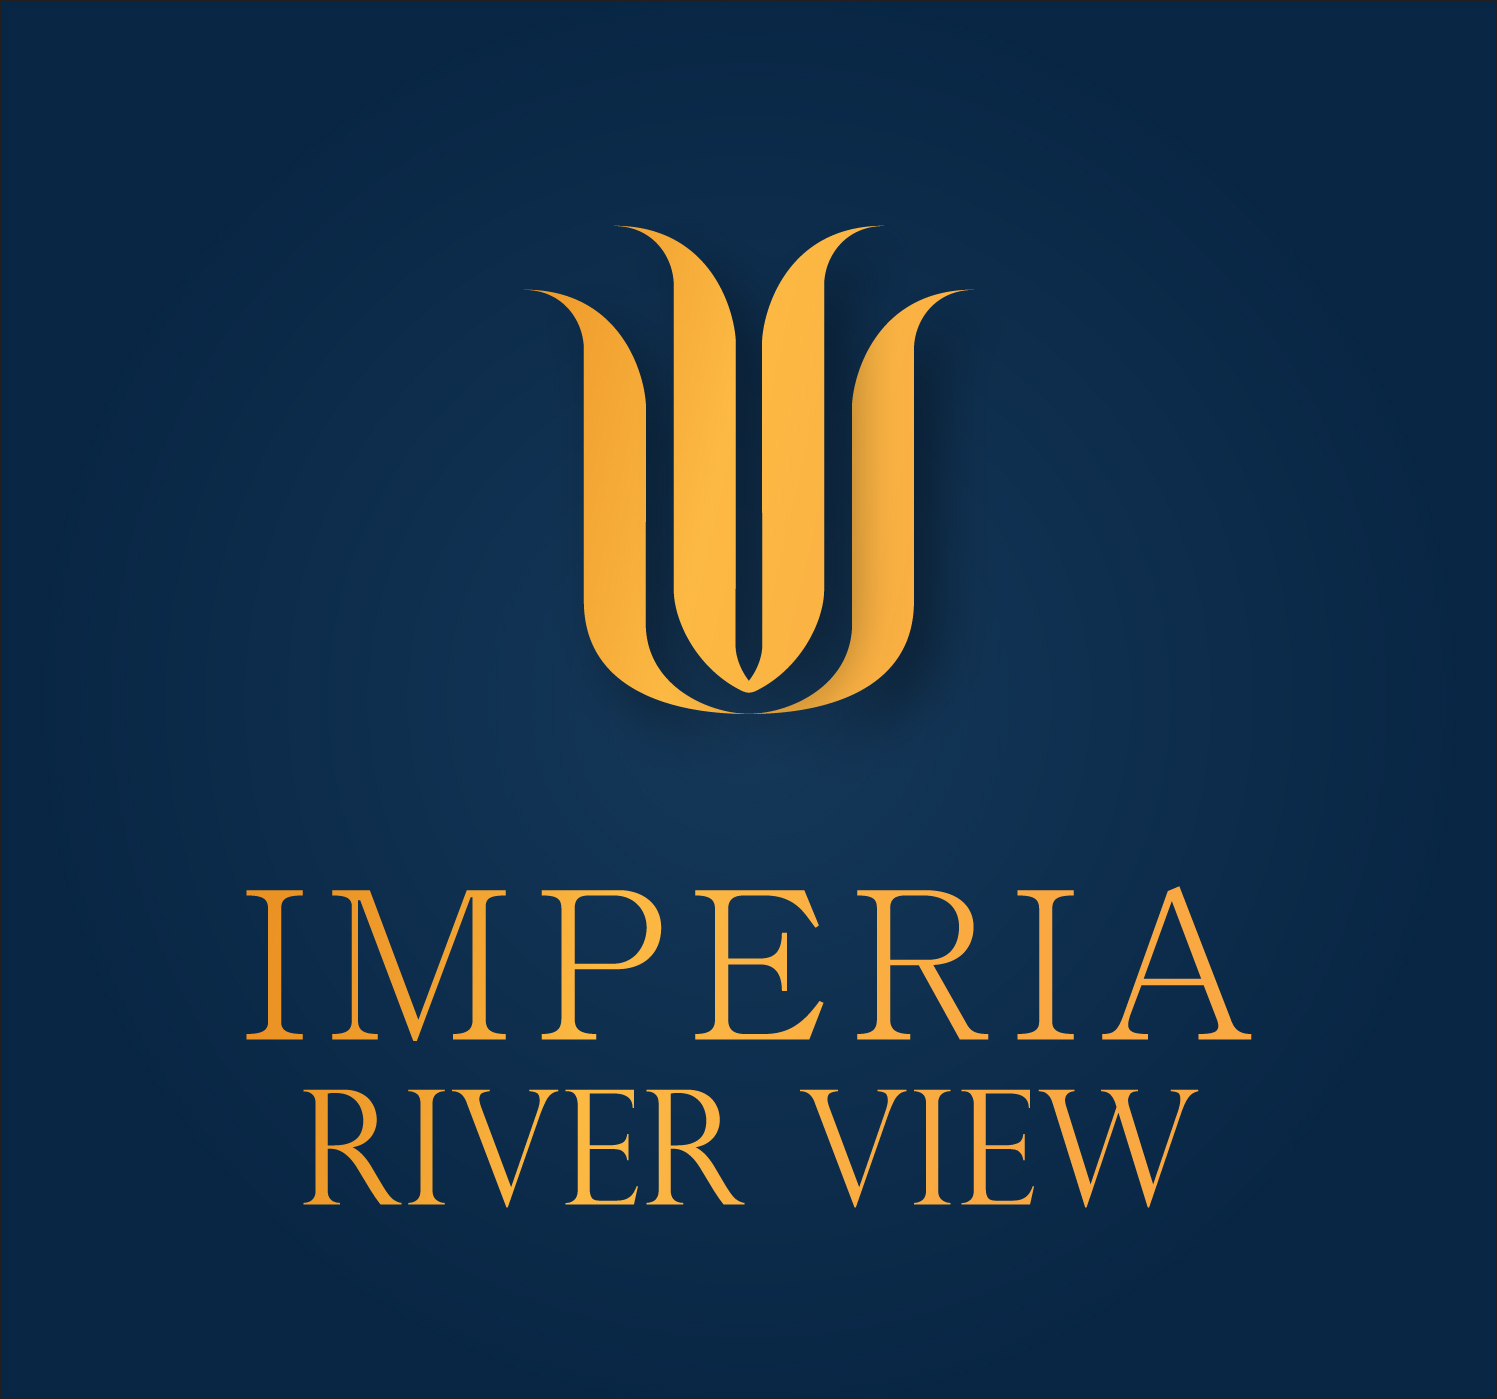 Imperia River View